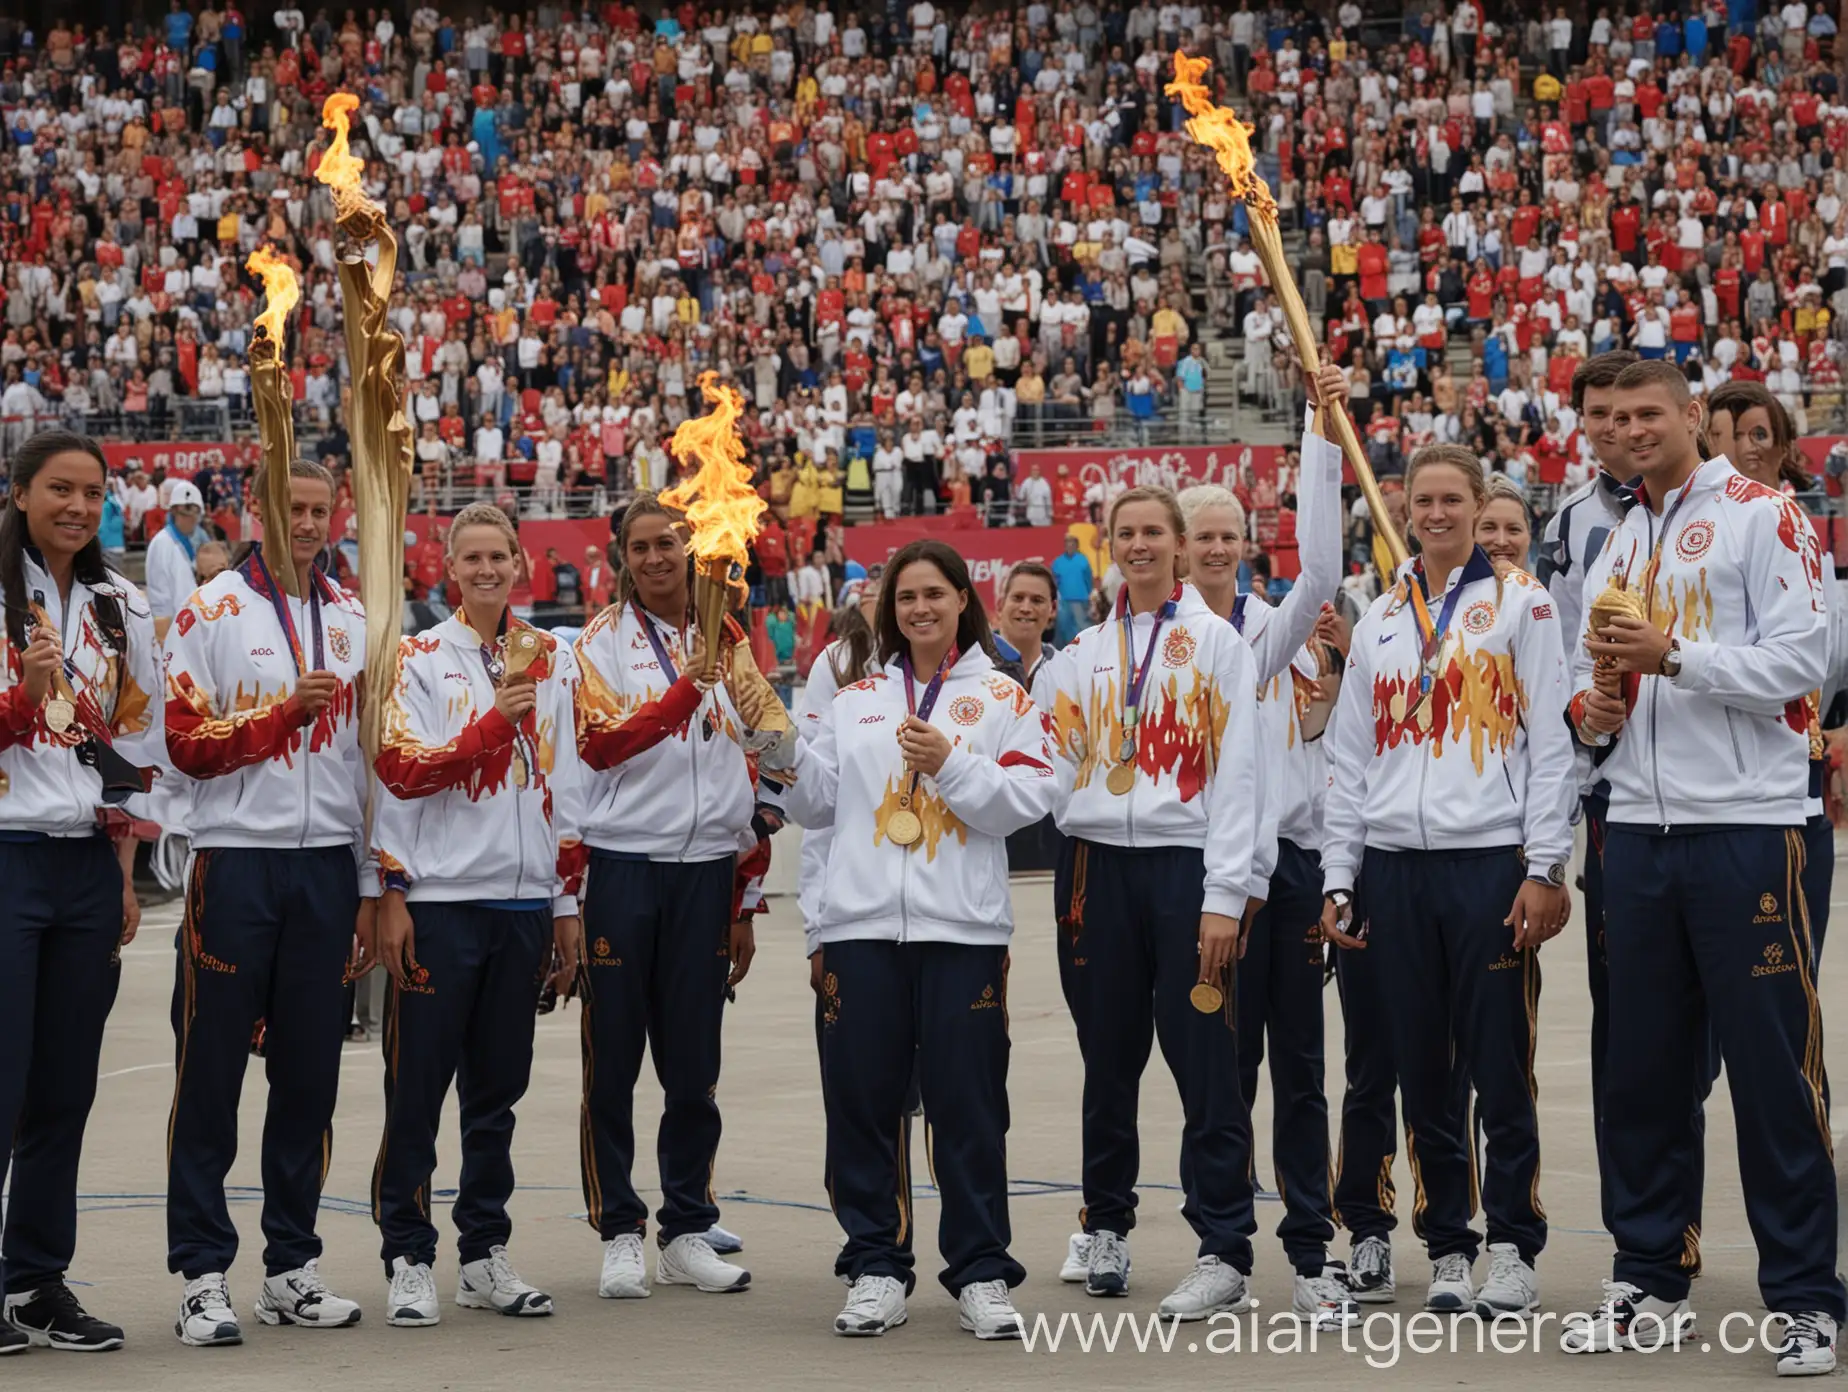 олимпийский мишка с олимпийским факелом и олимпийскими медалями в руках окружённый олимпийскими спортсменами